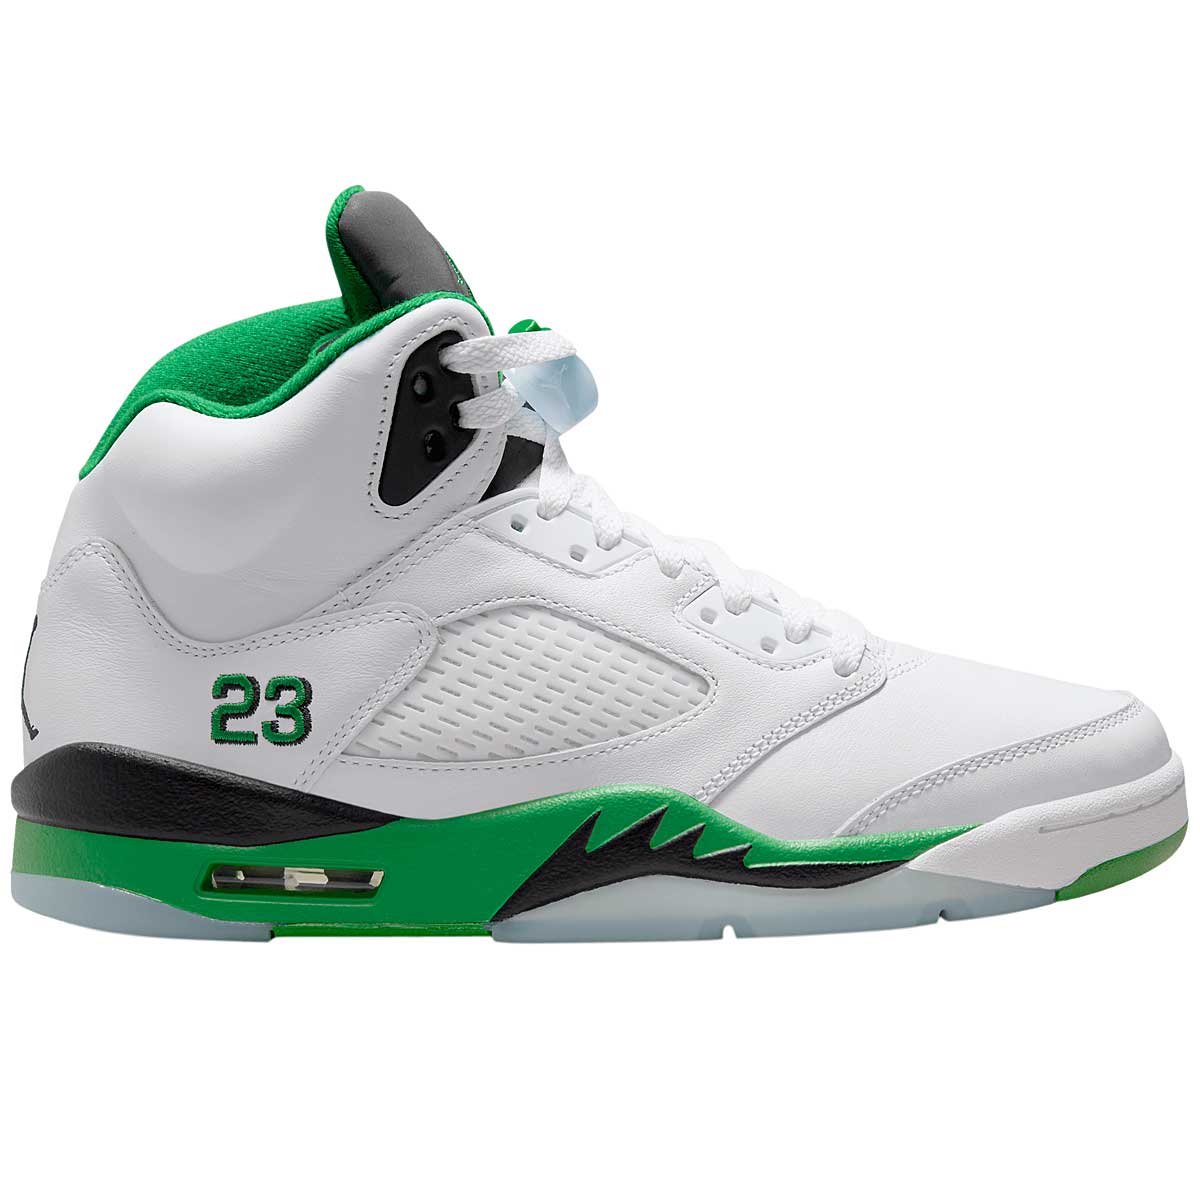 Jordan Wmns Air Jordan 5 Retro Lucky Green, White/ltblue/black EU36 1/2